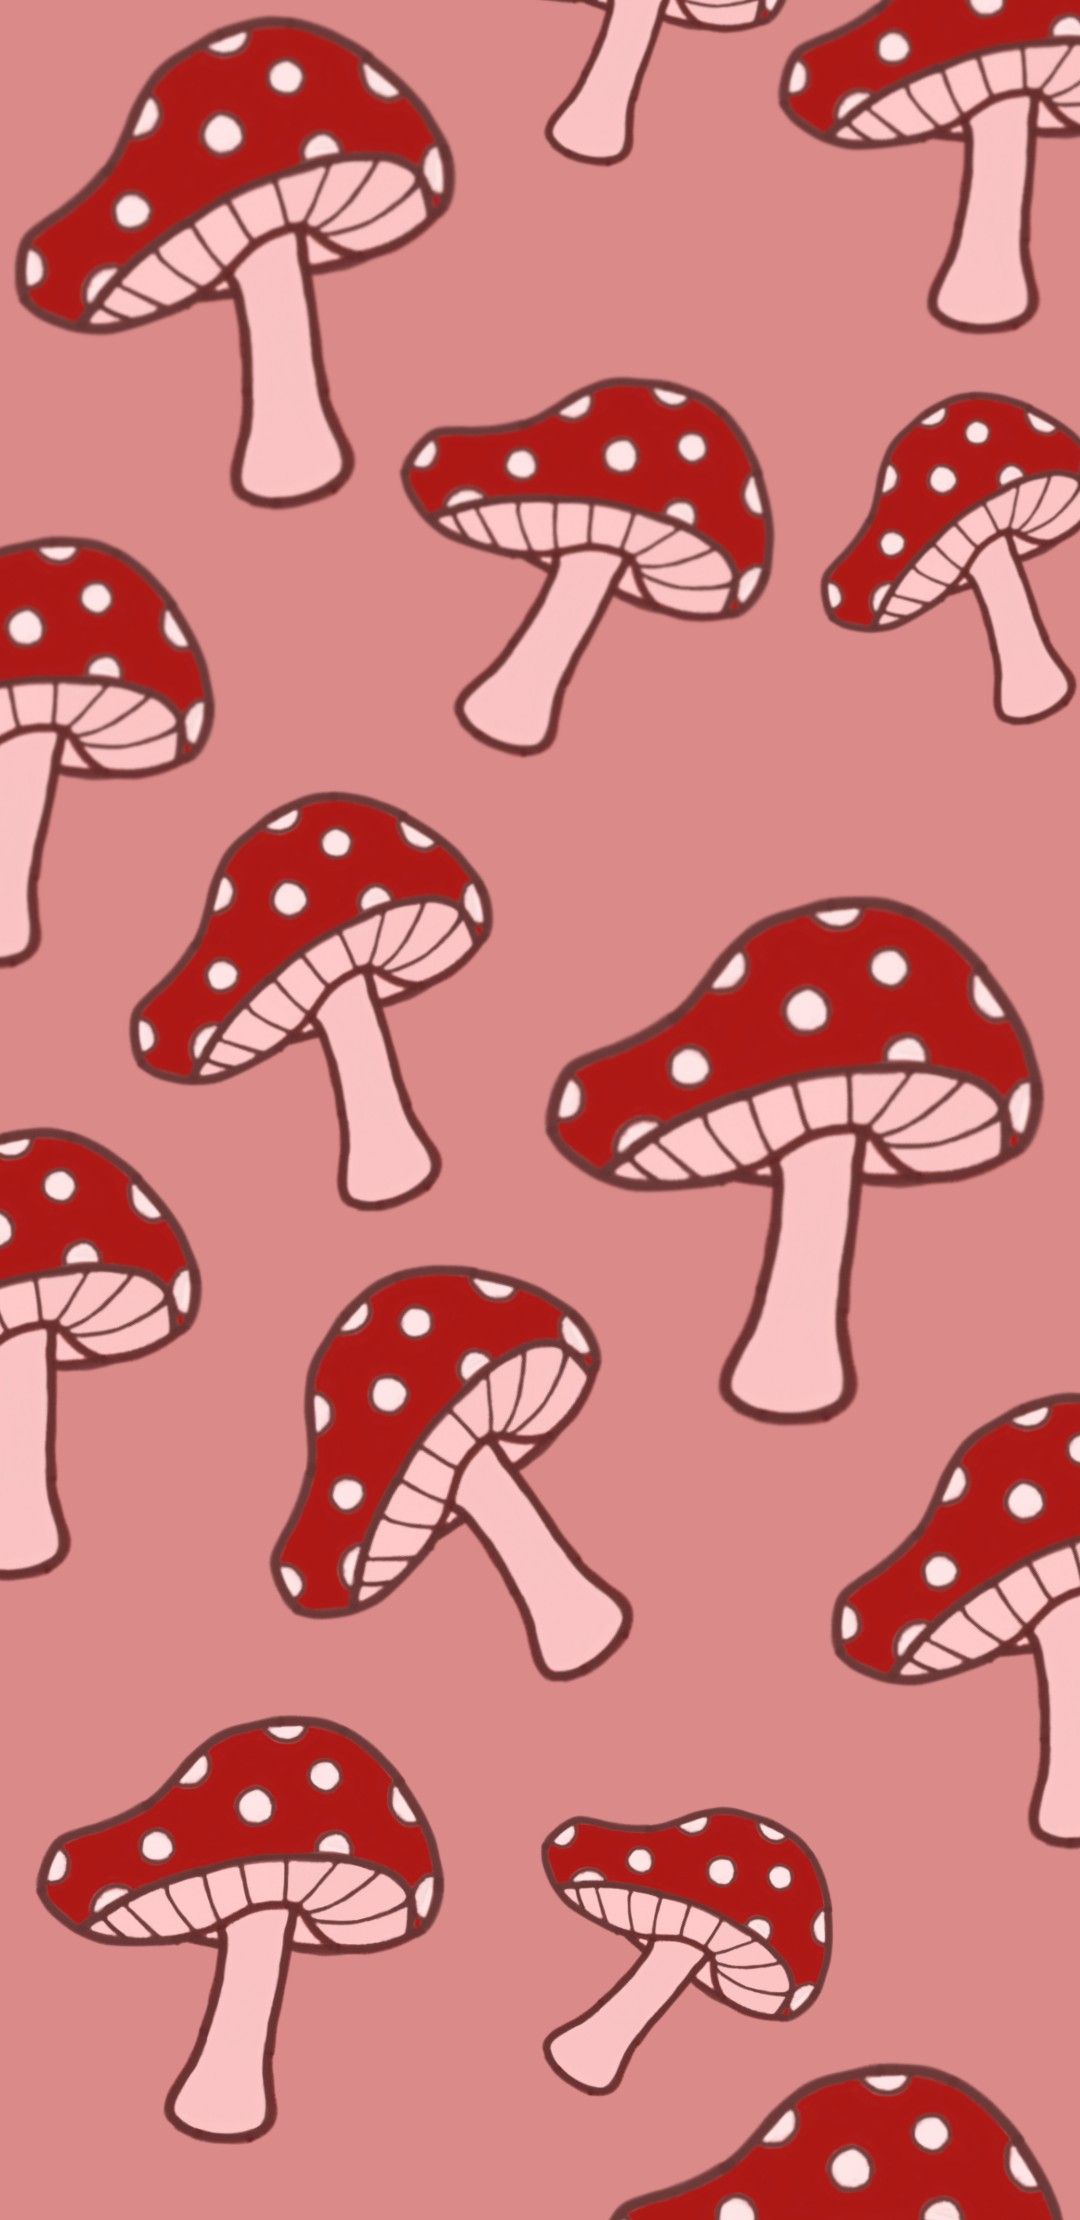 Mushroom wallpaper. iPhone wallpaper pattern, Frog wallpaper, Mushroom wallpaper